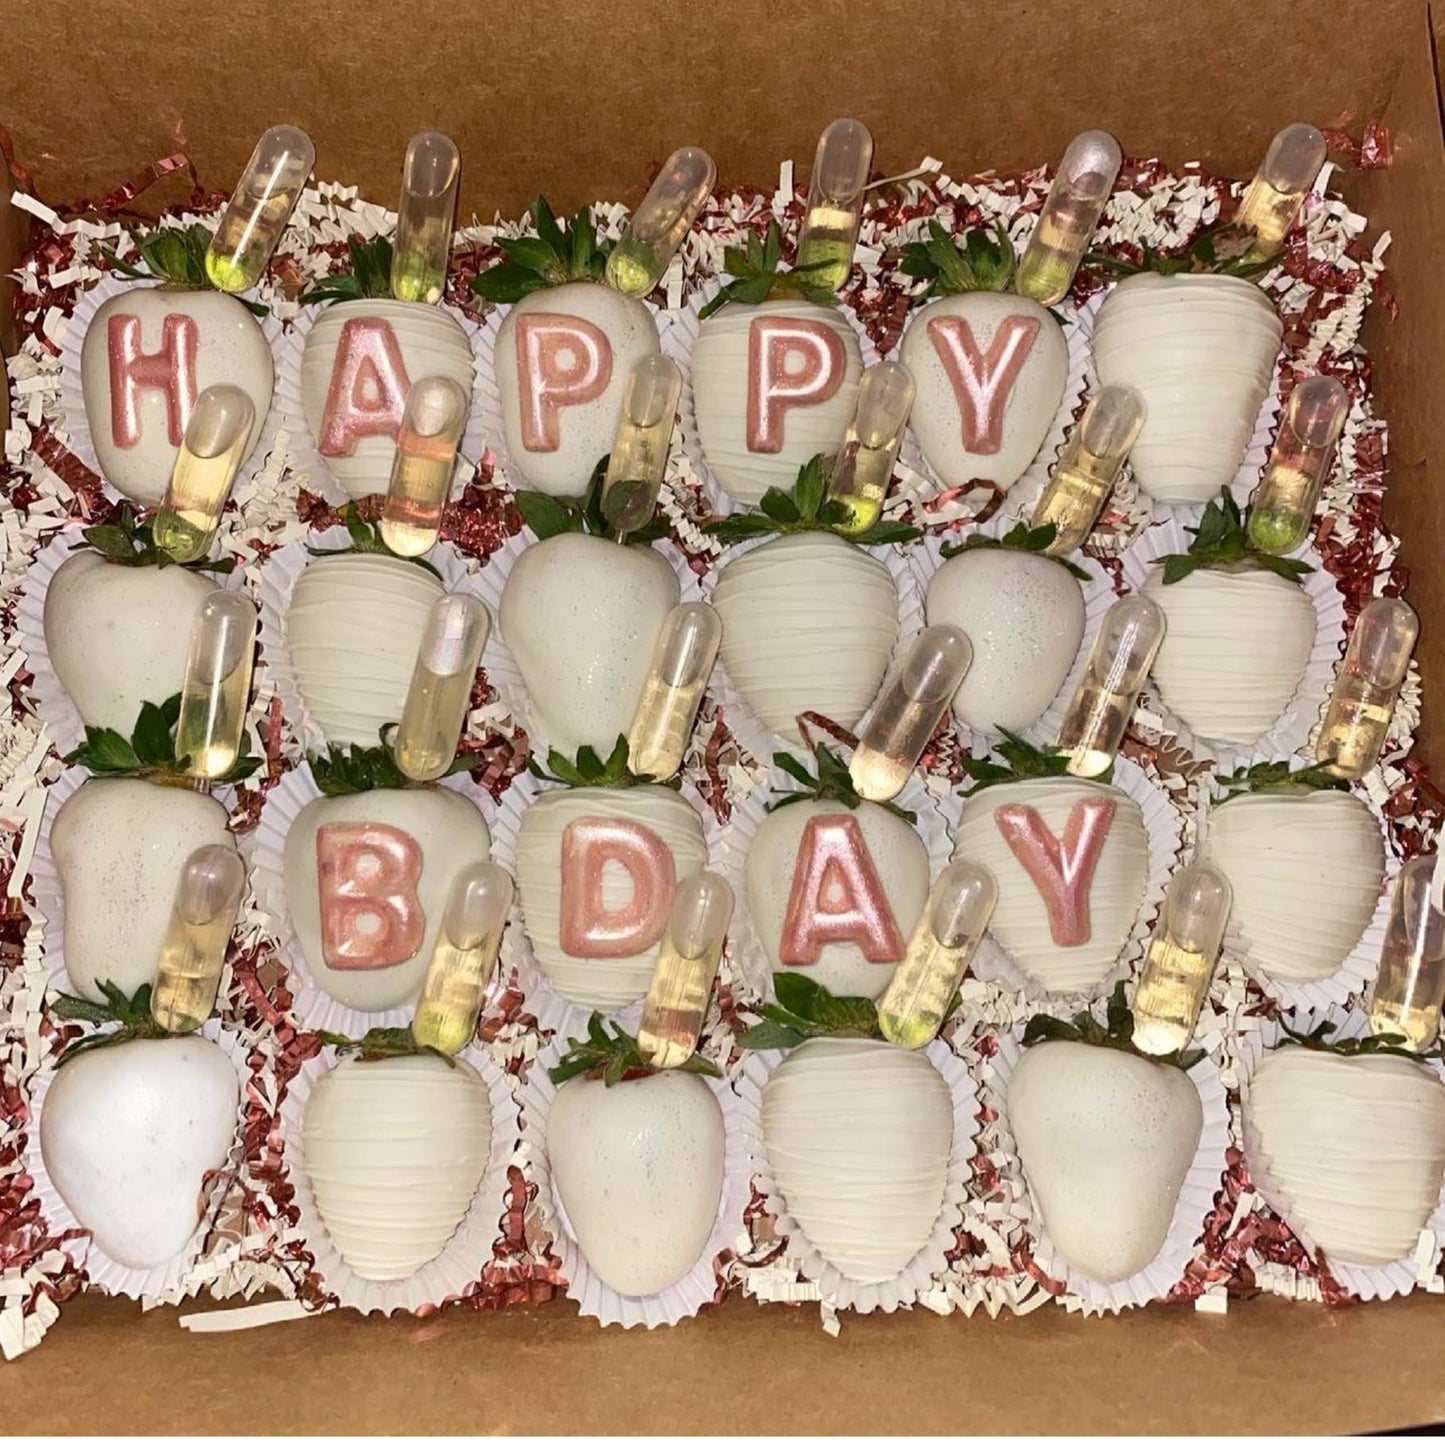 Birthday Edition - Chocolate Covered Strawberries (x24)